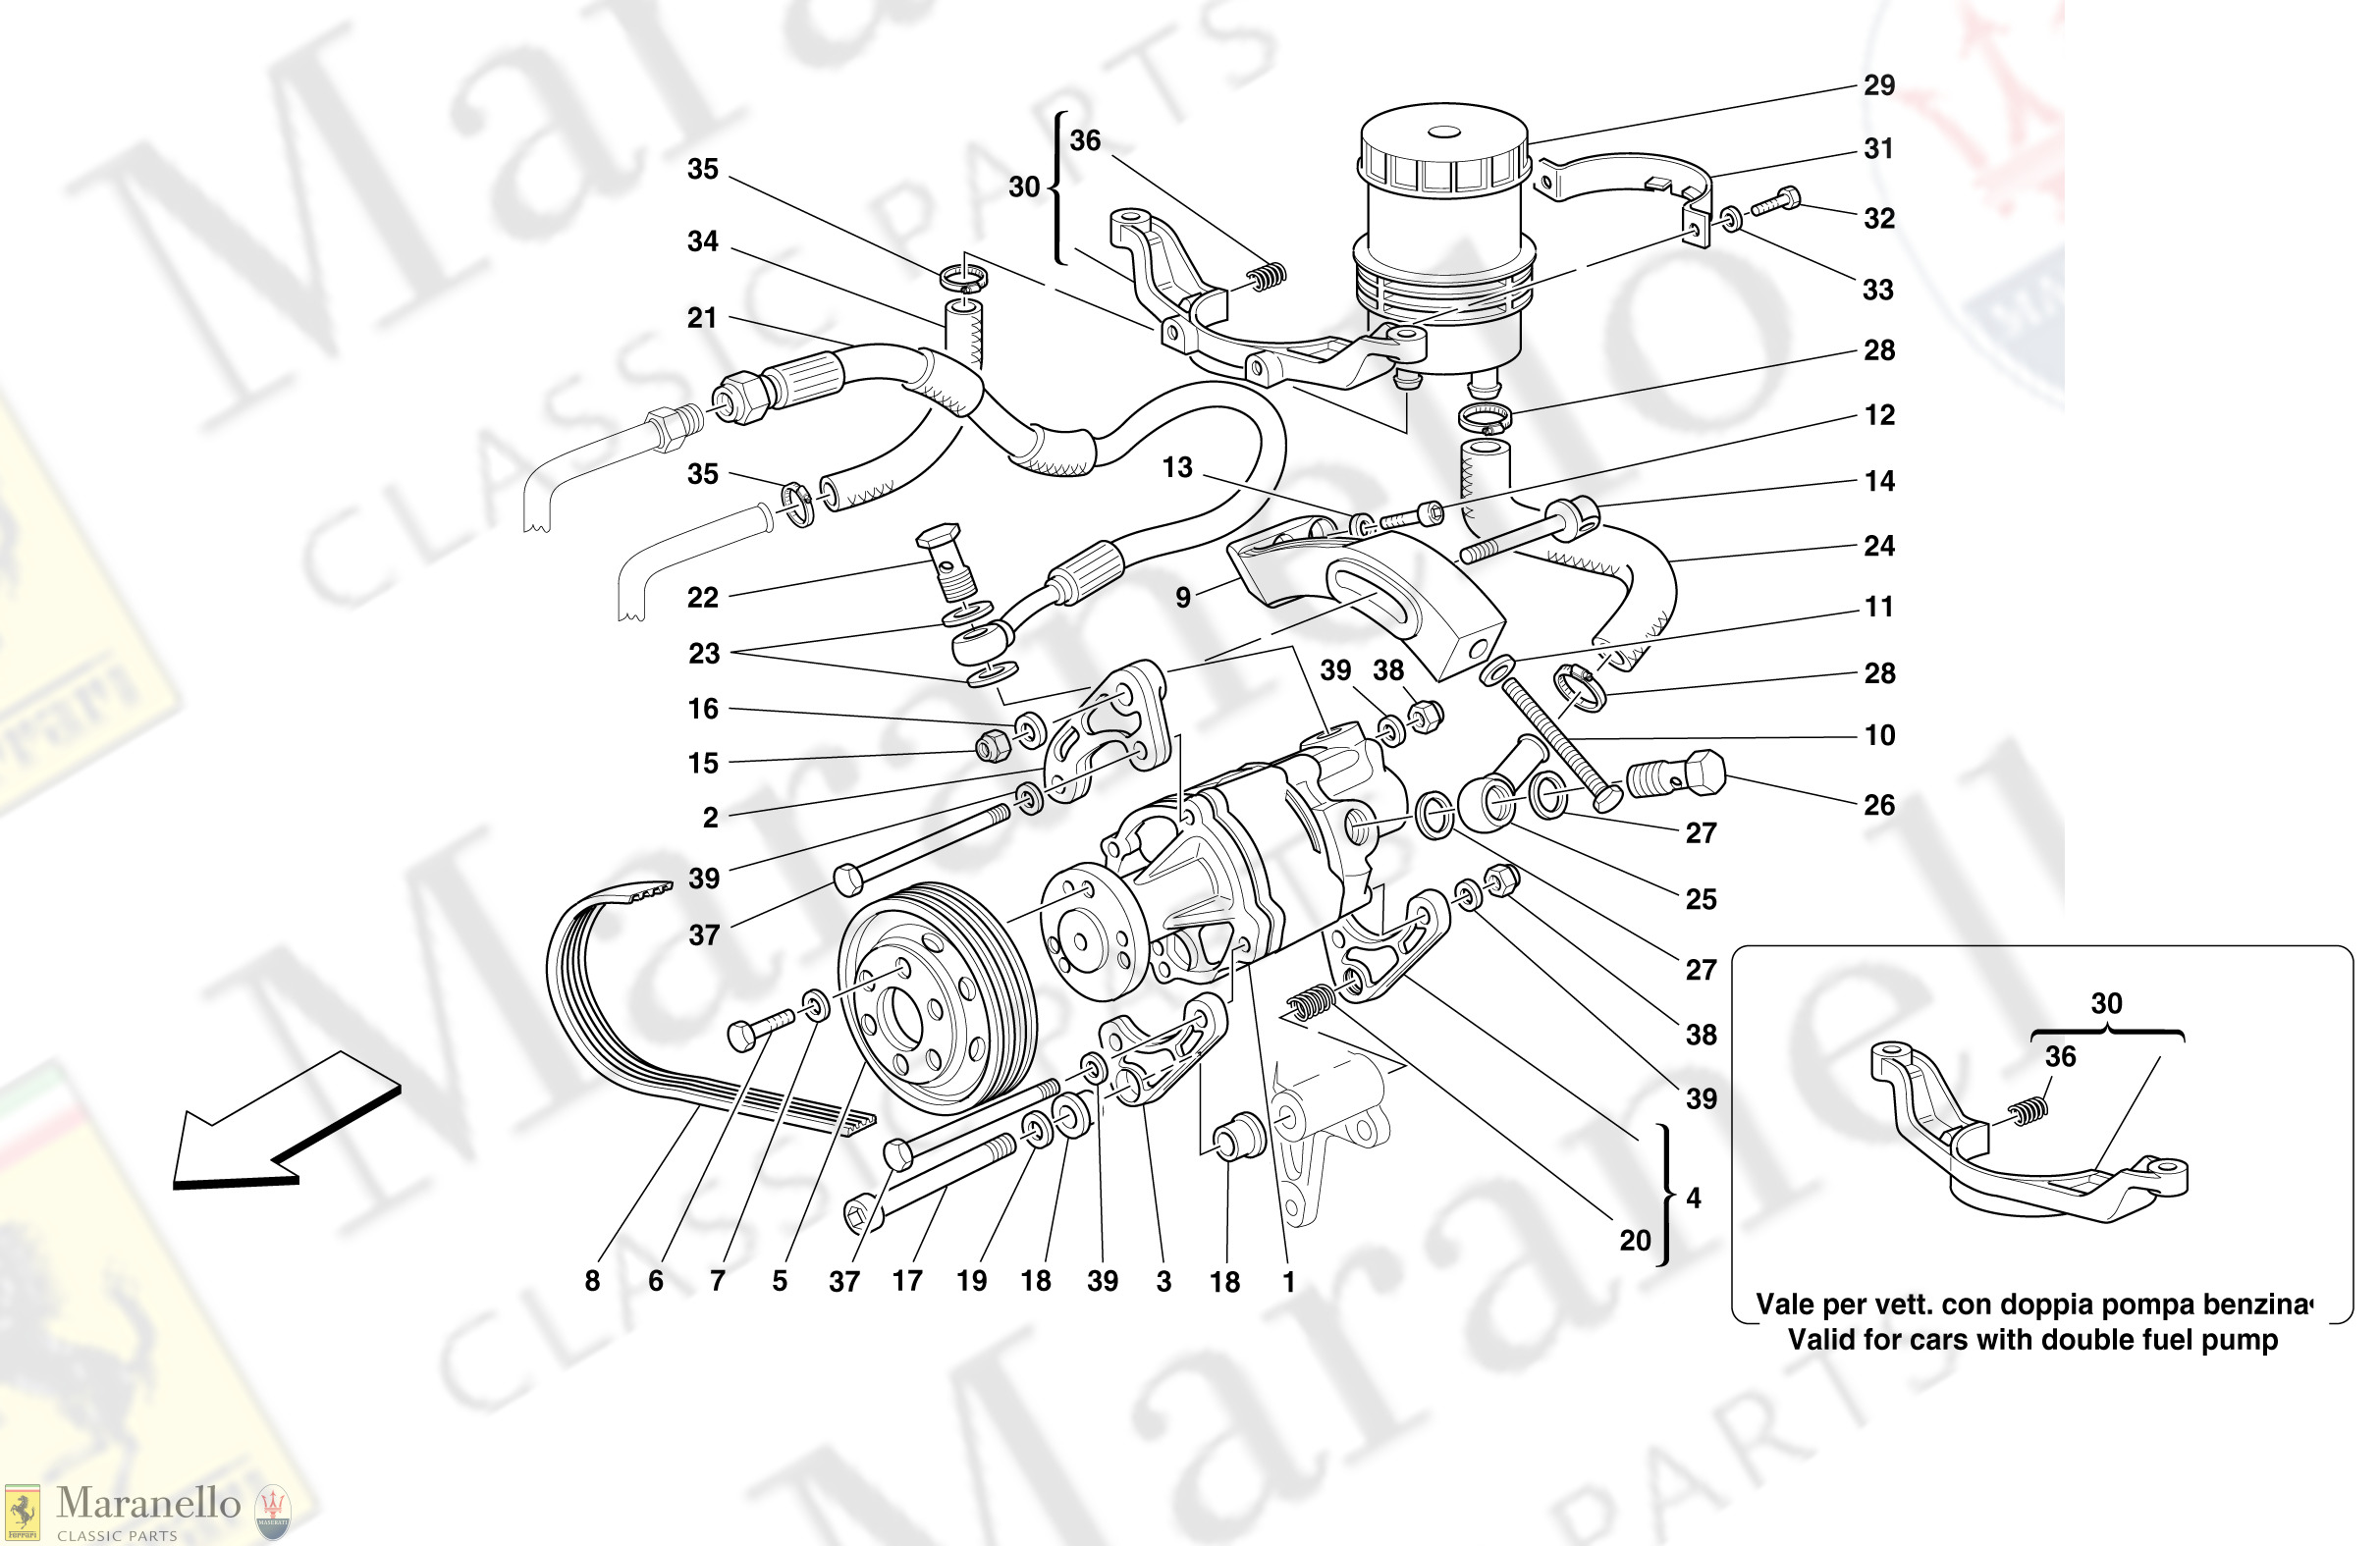 042 - Hydraulic Steering Pump -Valid For Steering Box With Power Steering Cars-